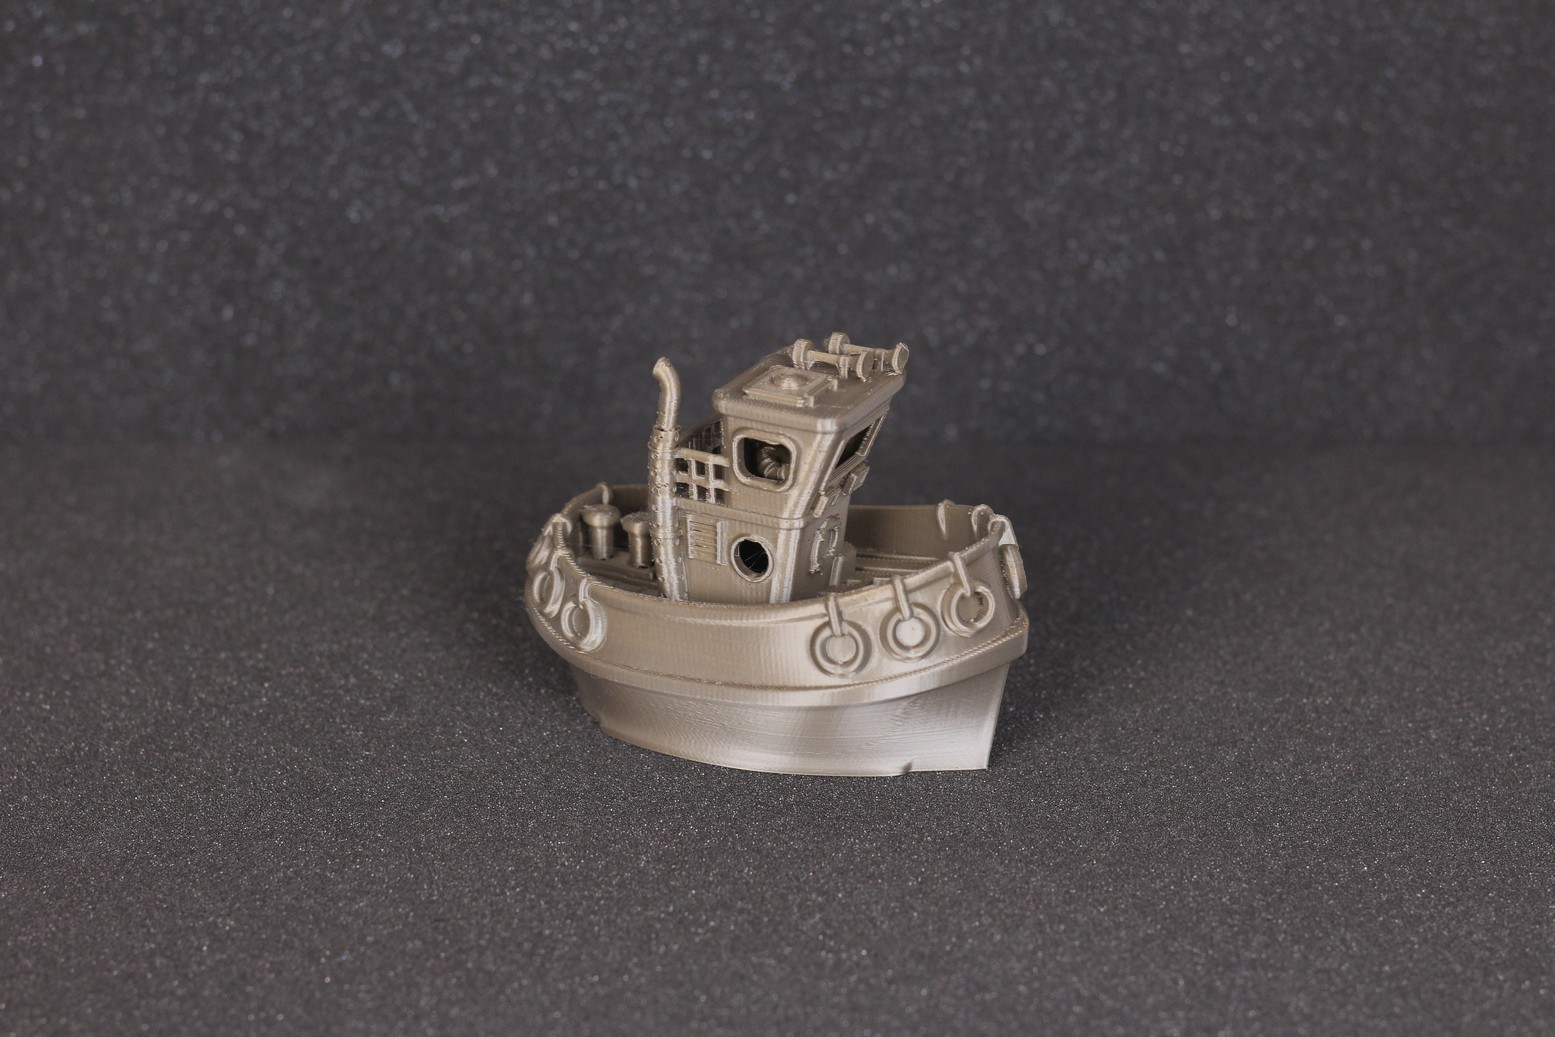 Ship printed on CR 200B 1 | Creality CR-200B Review: Budget Enclosed 3D Printer